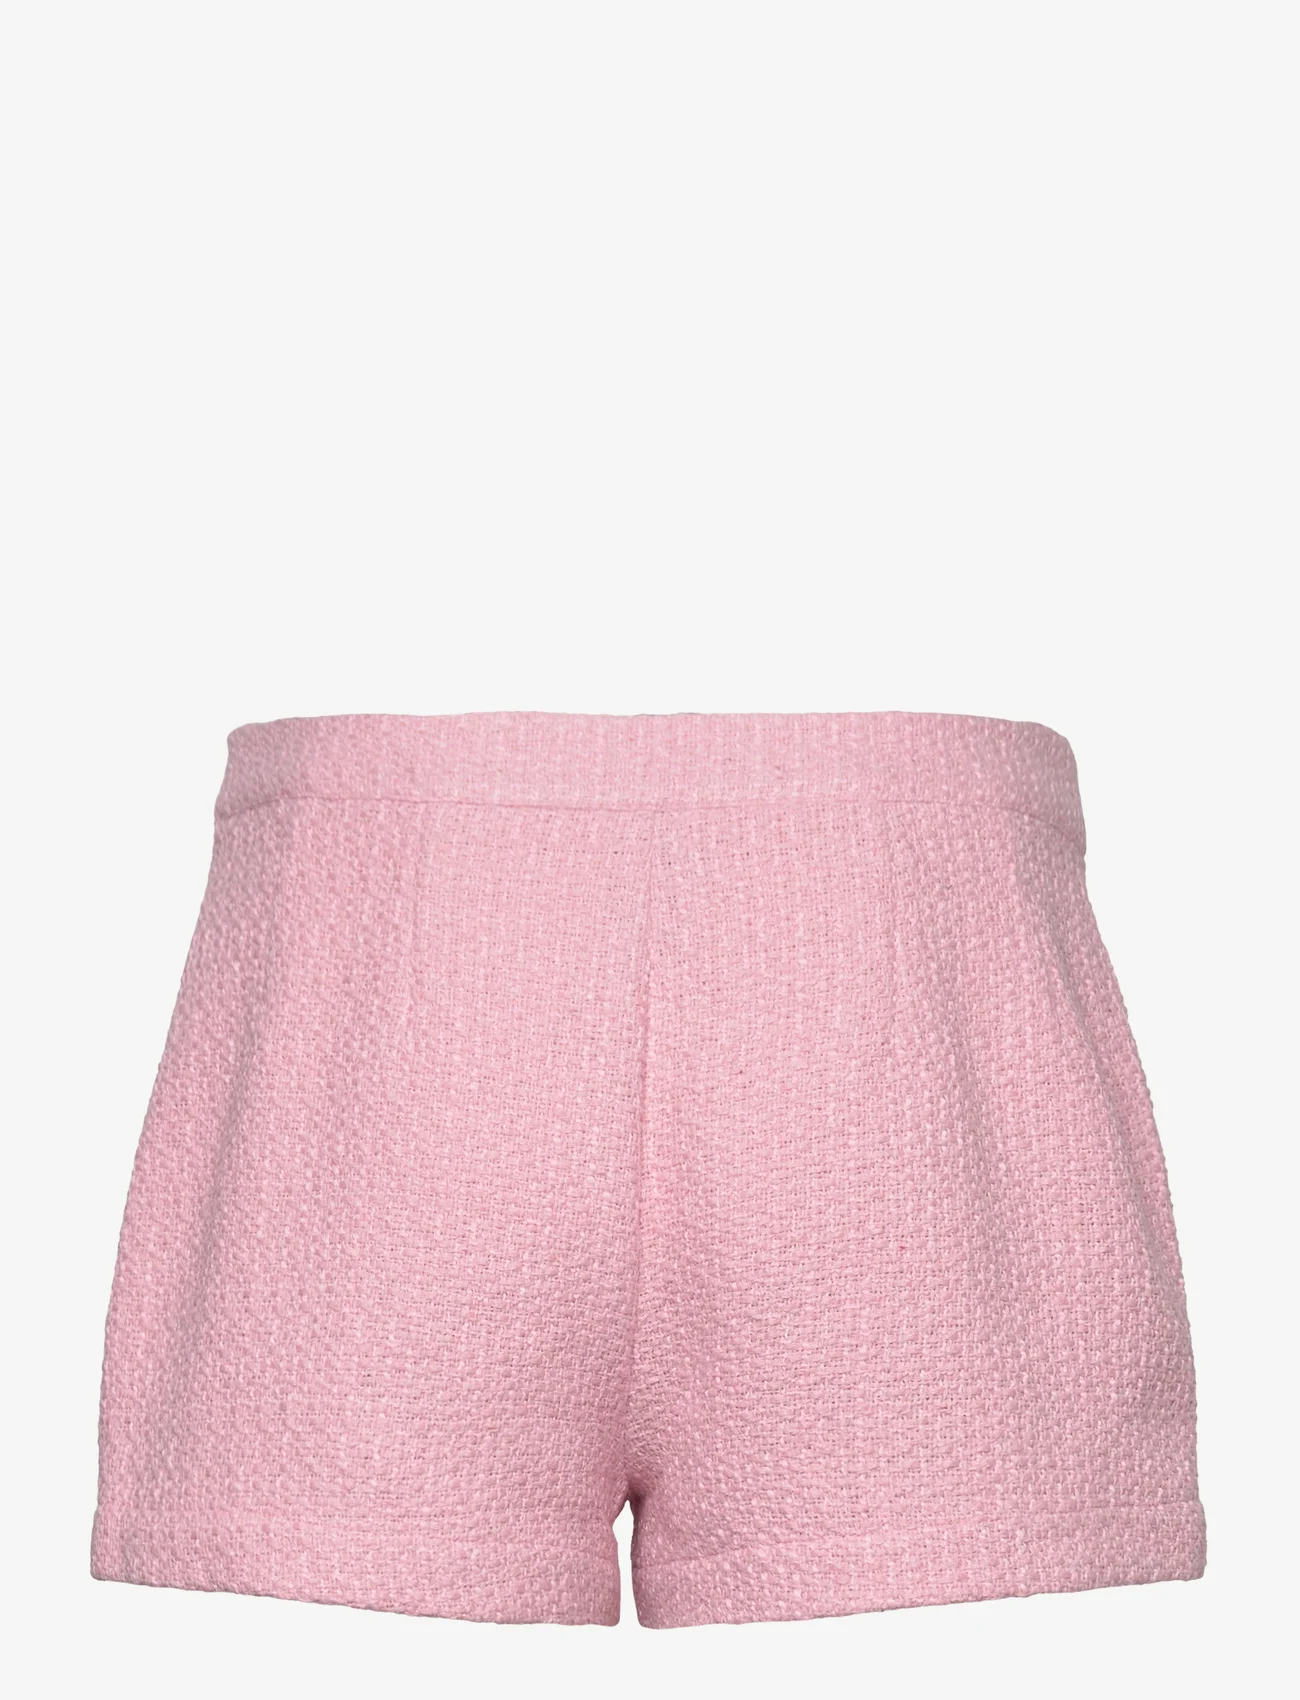 Twist & Tango - Yuna Shorts - casual shorts - azalea pink - 1